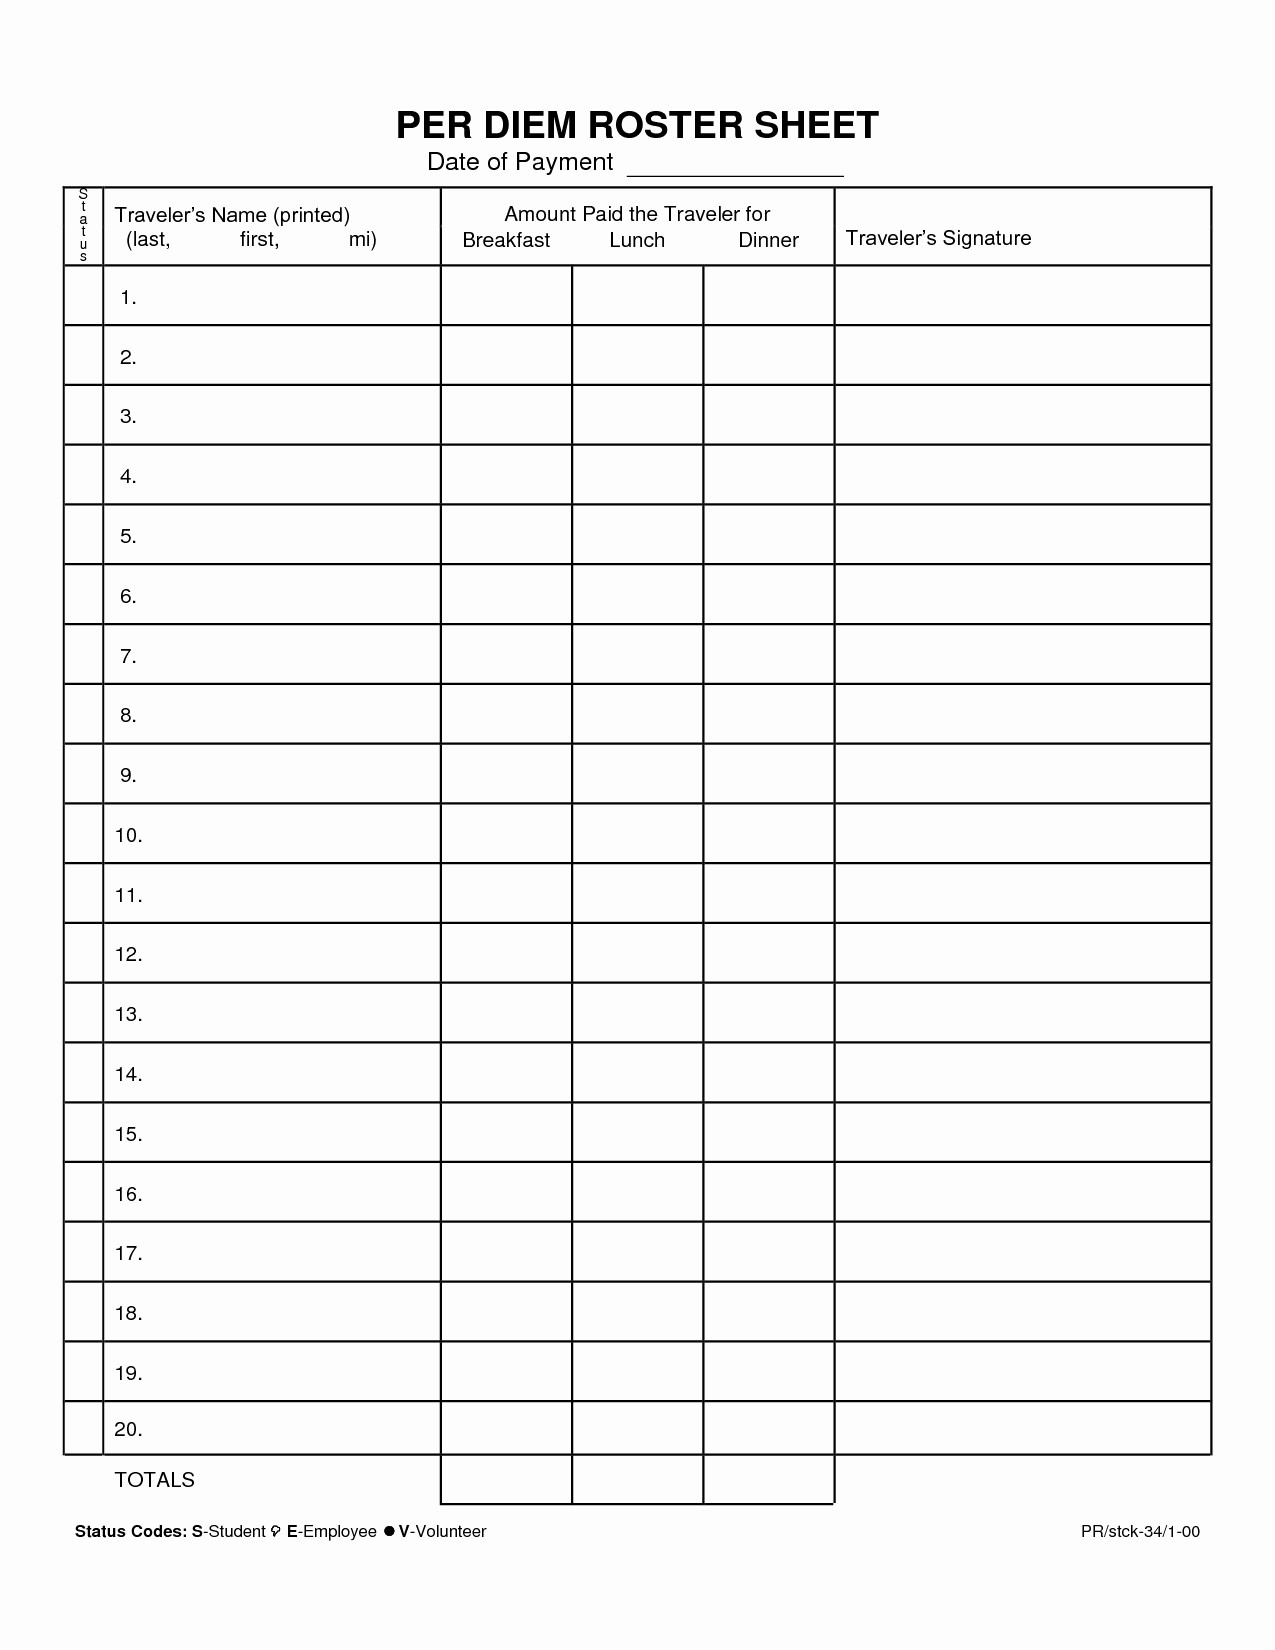 Fantasy Football Depth Chart Footballupdate Co Printable Draft - Fantasy Football Draft Sheets Printable Free